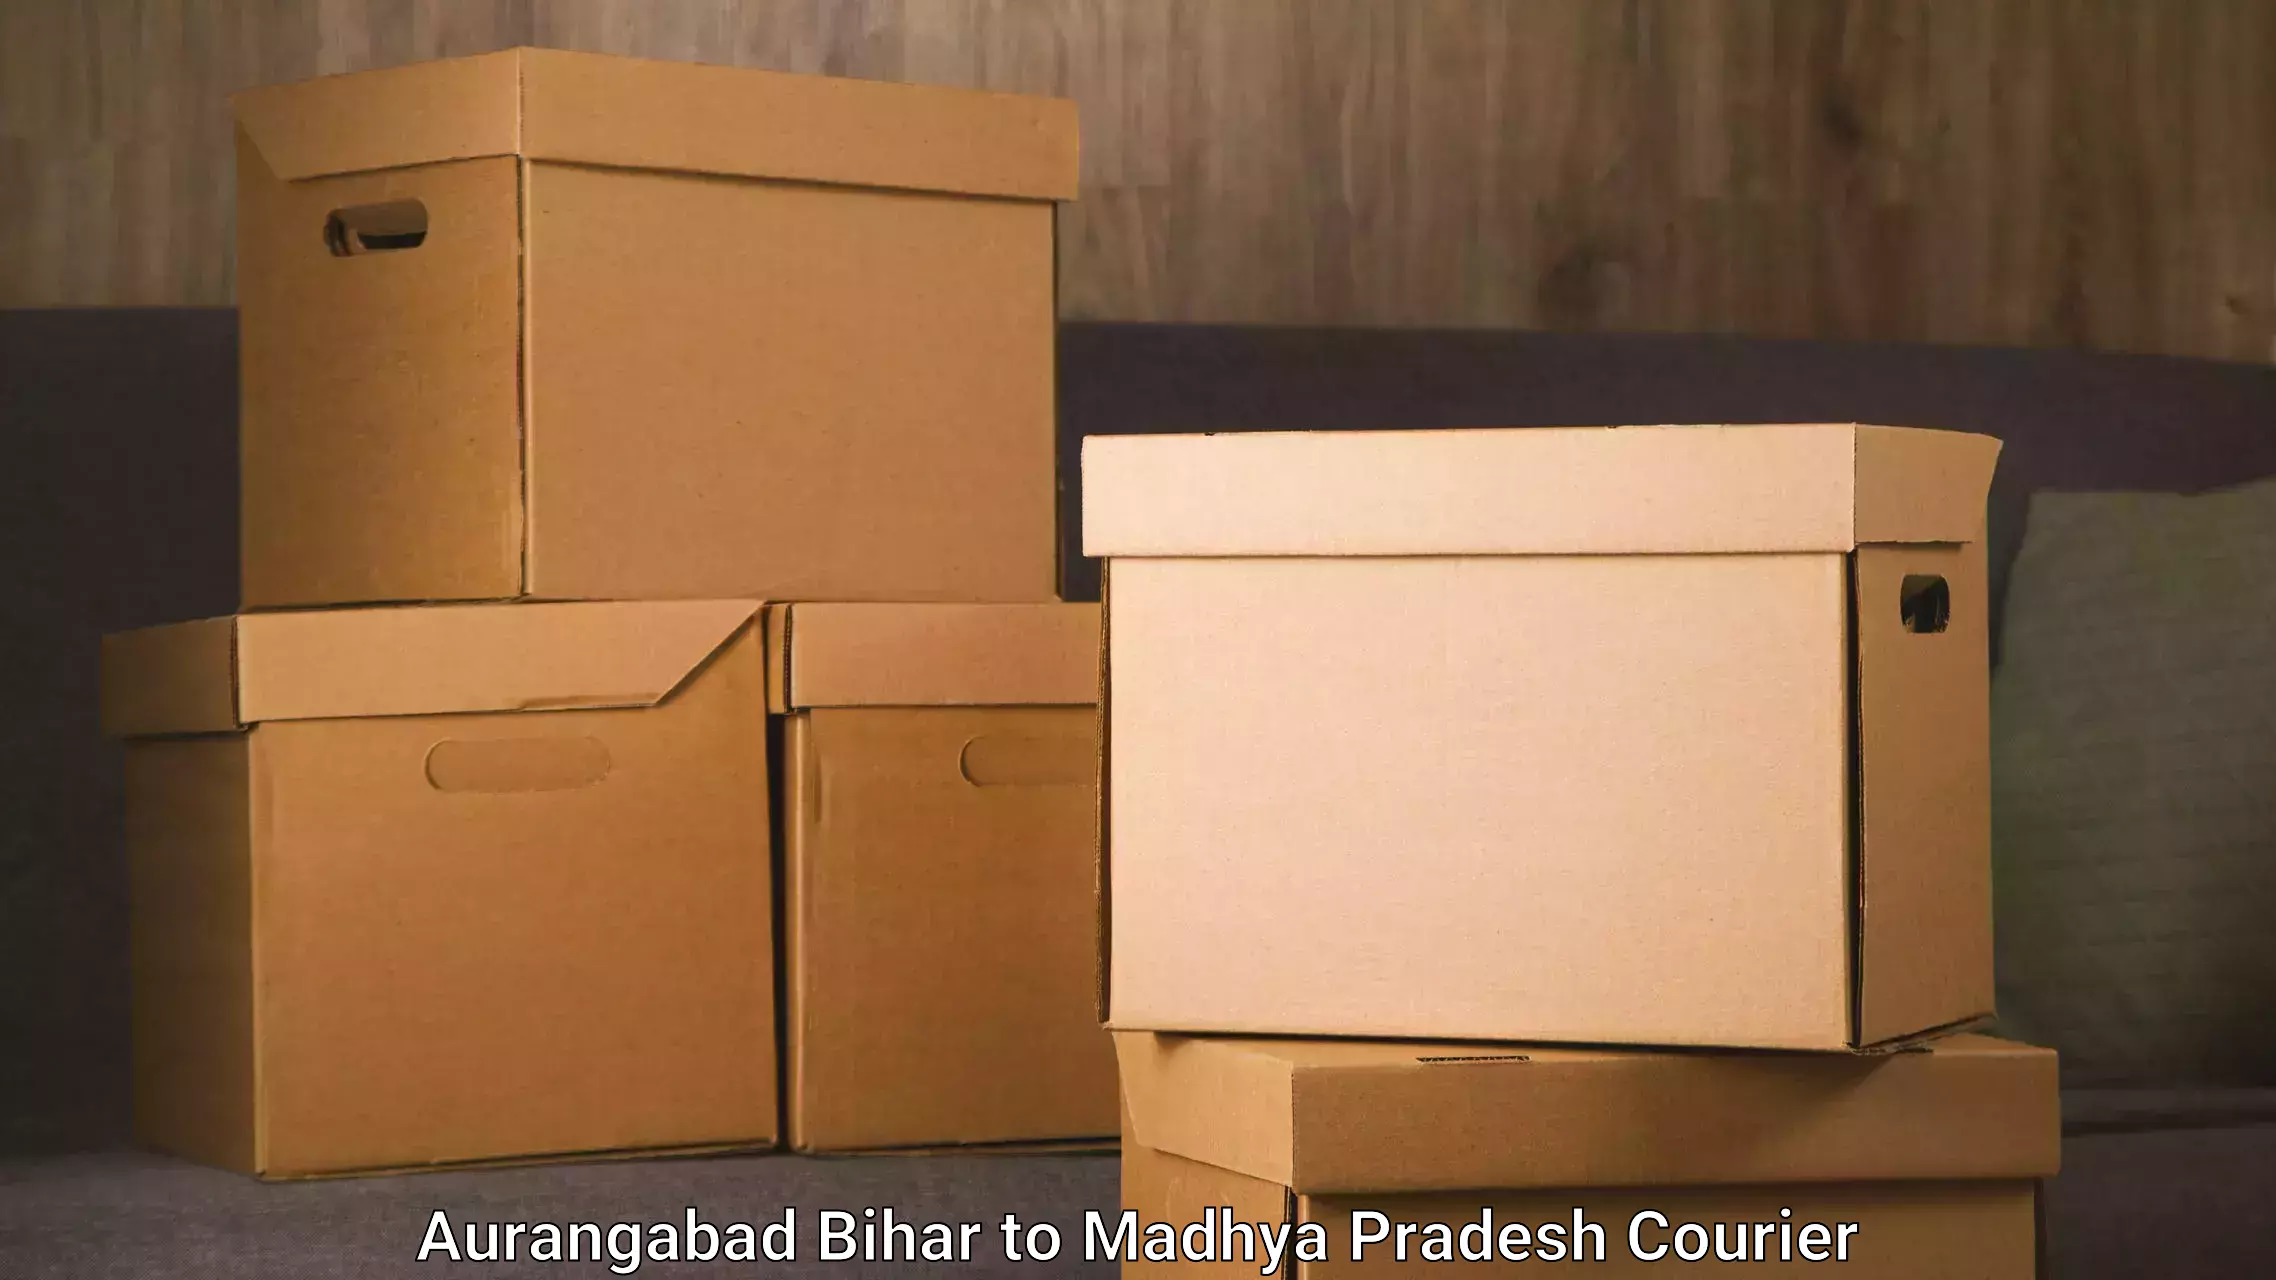 Professional moving company Aurangabad Bihar to Dhamnod